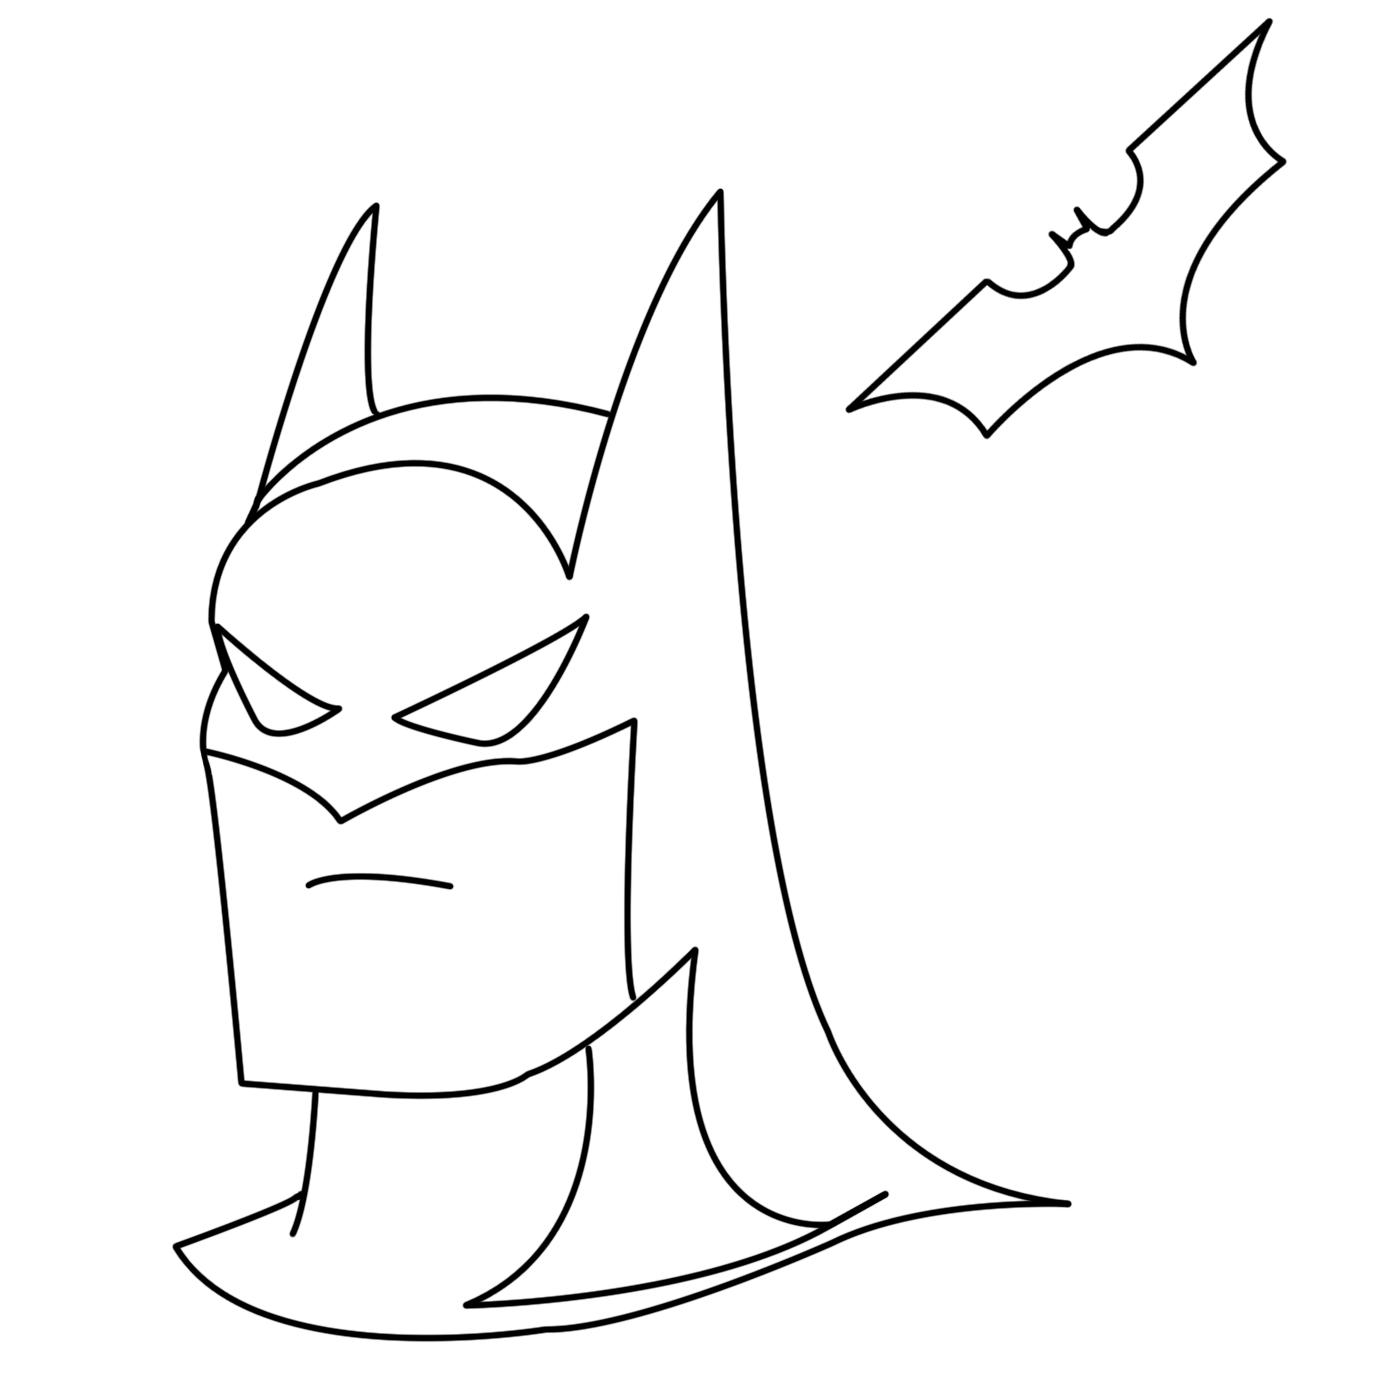 Batman Logo Drawing | Batman Logo Coloring/Drawing Pages | Outline Vector |  Printable Cartoon Photos | Free Download | Cool ASCII Text Art 4 U